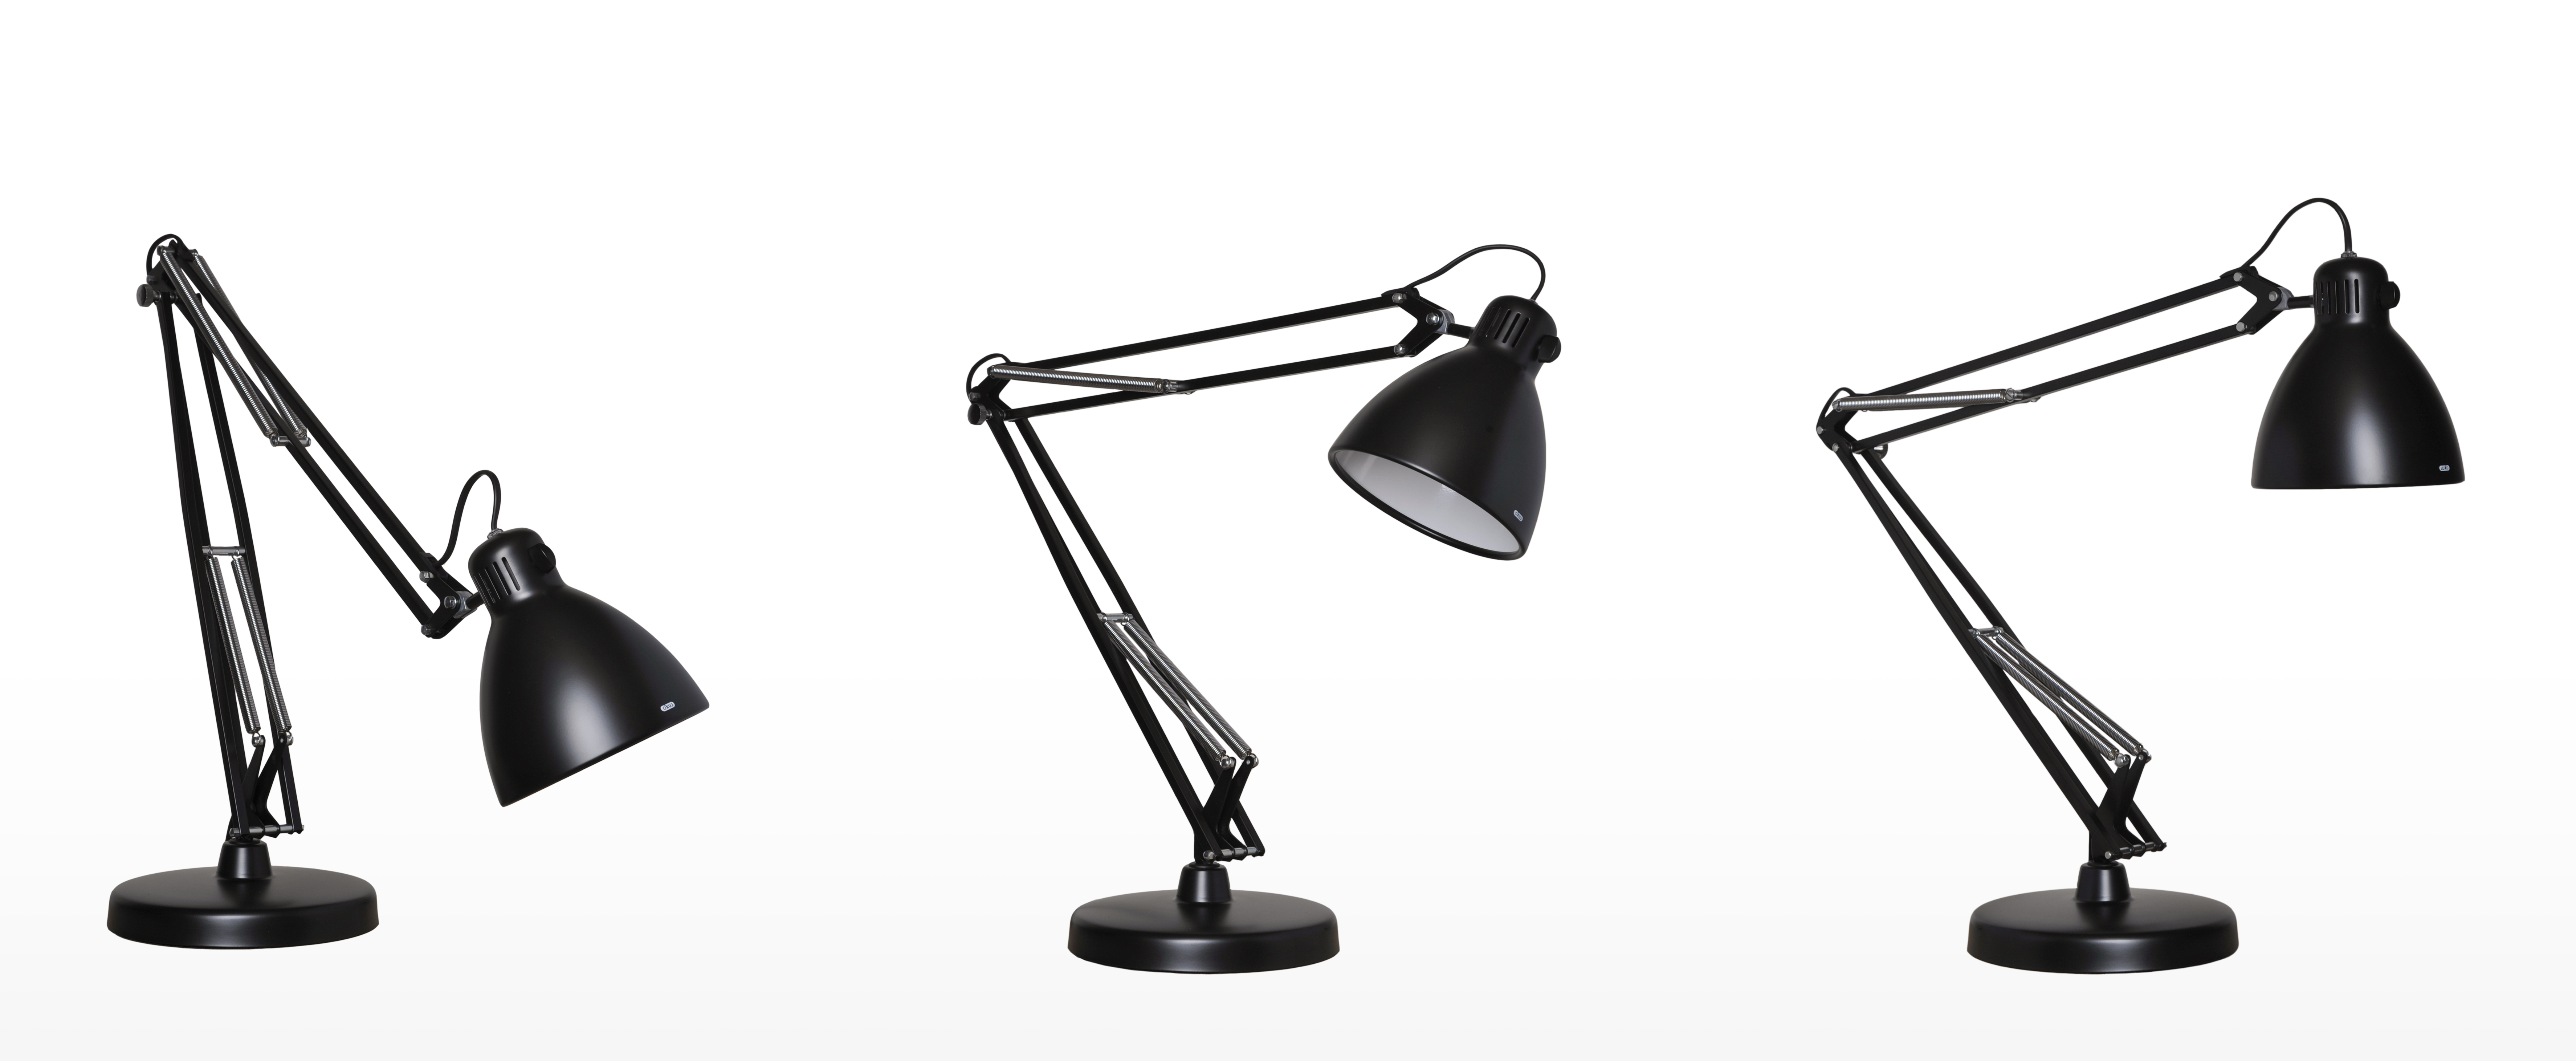 Lampka biurkowa Luxo L-1 firmy Glamox.jpg